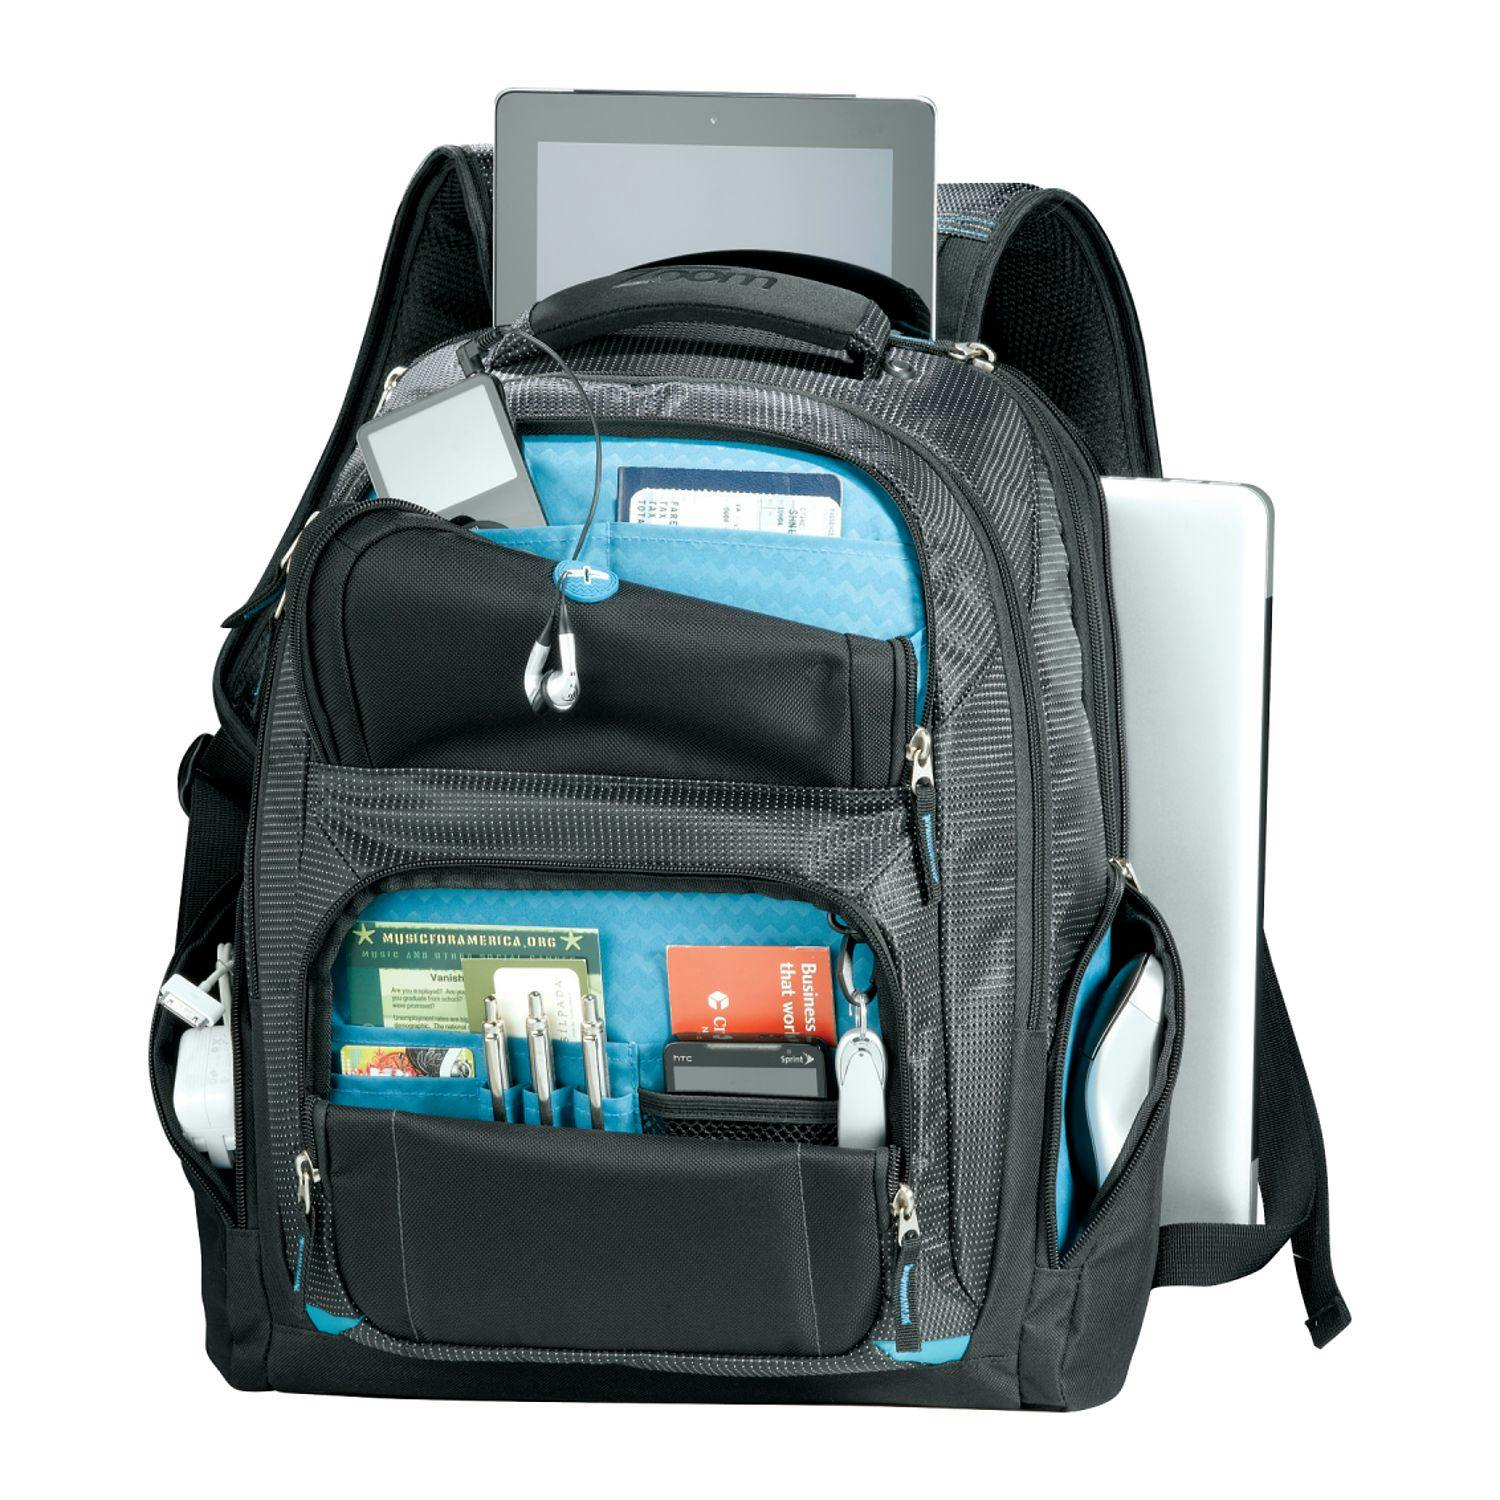 Zoom TSA 15" Computer Backpack - additional Image 2